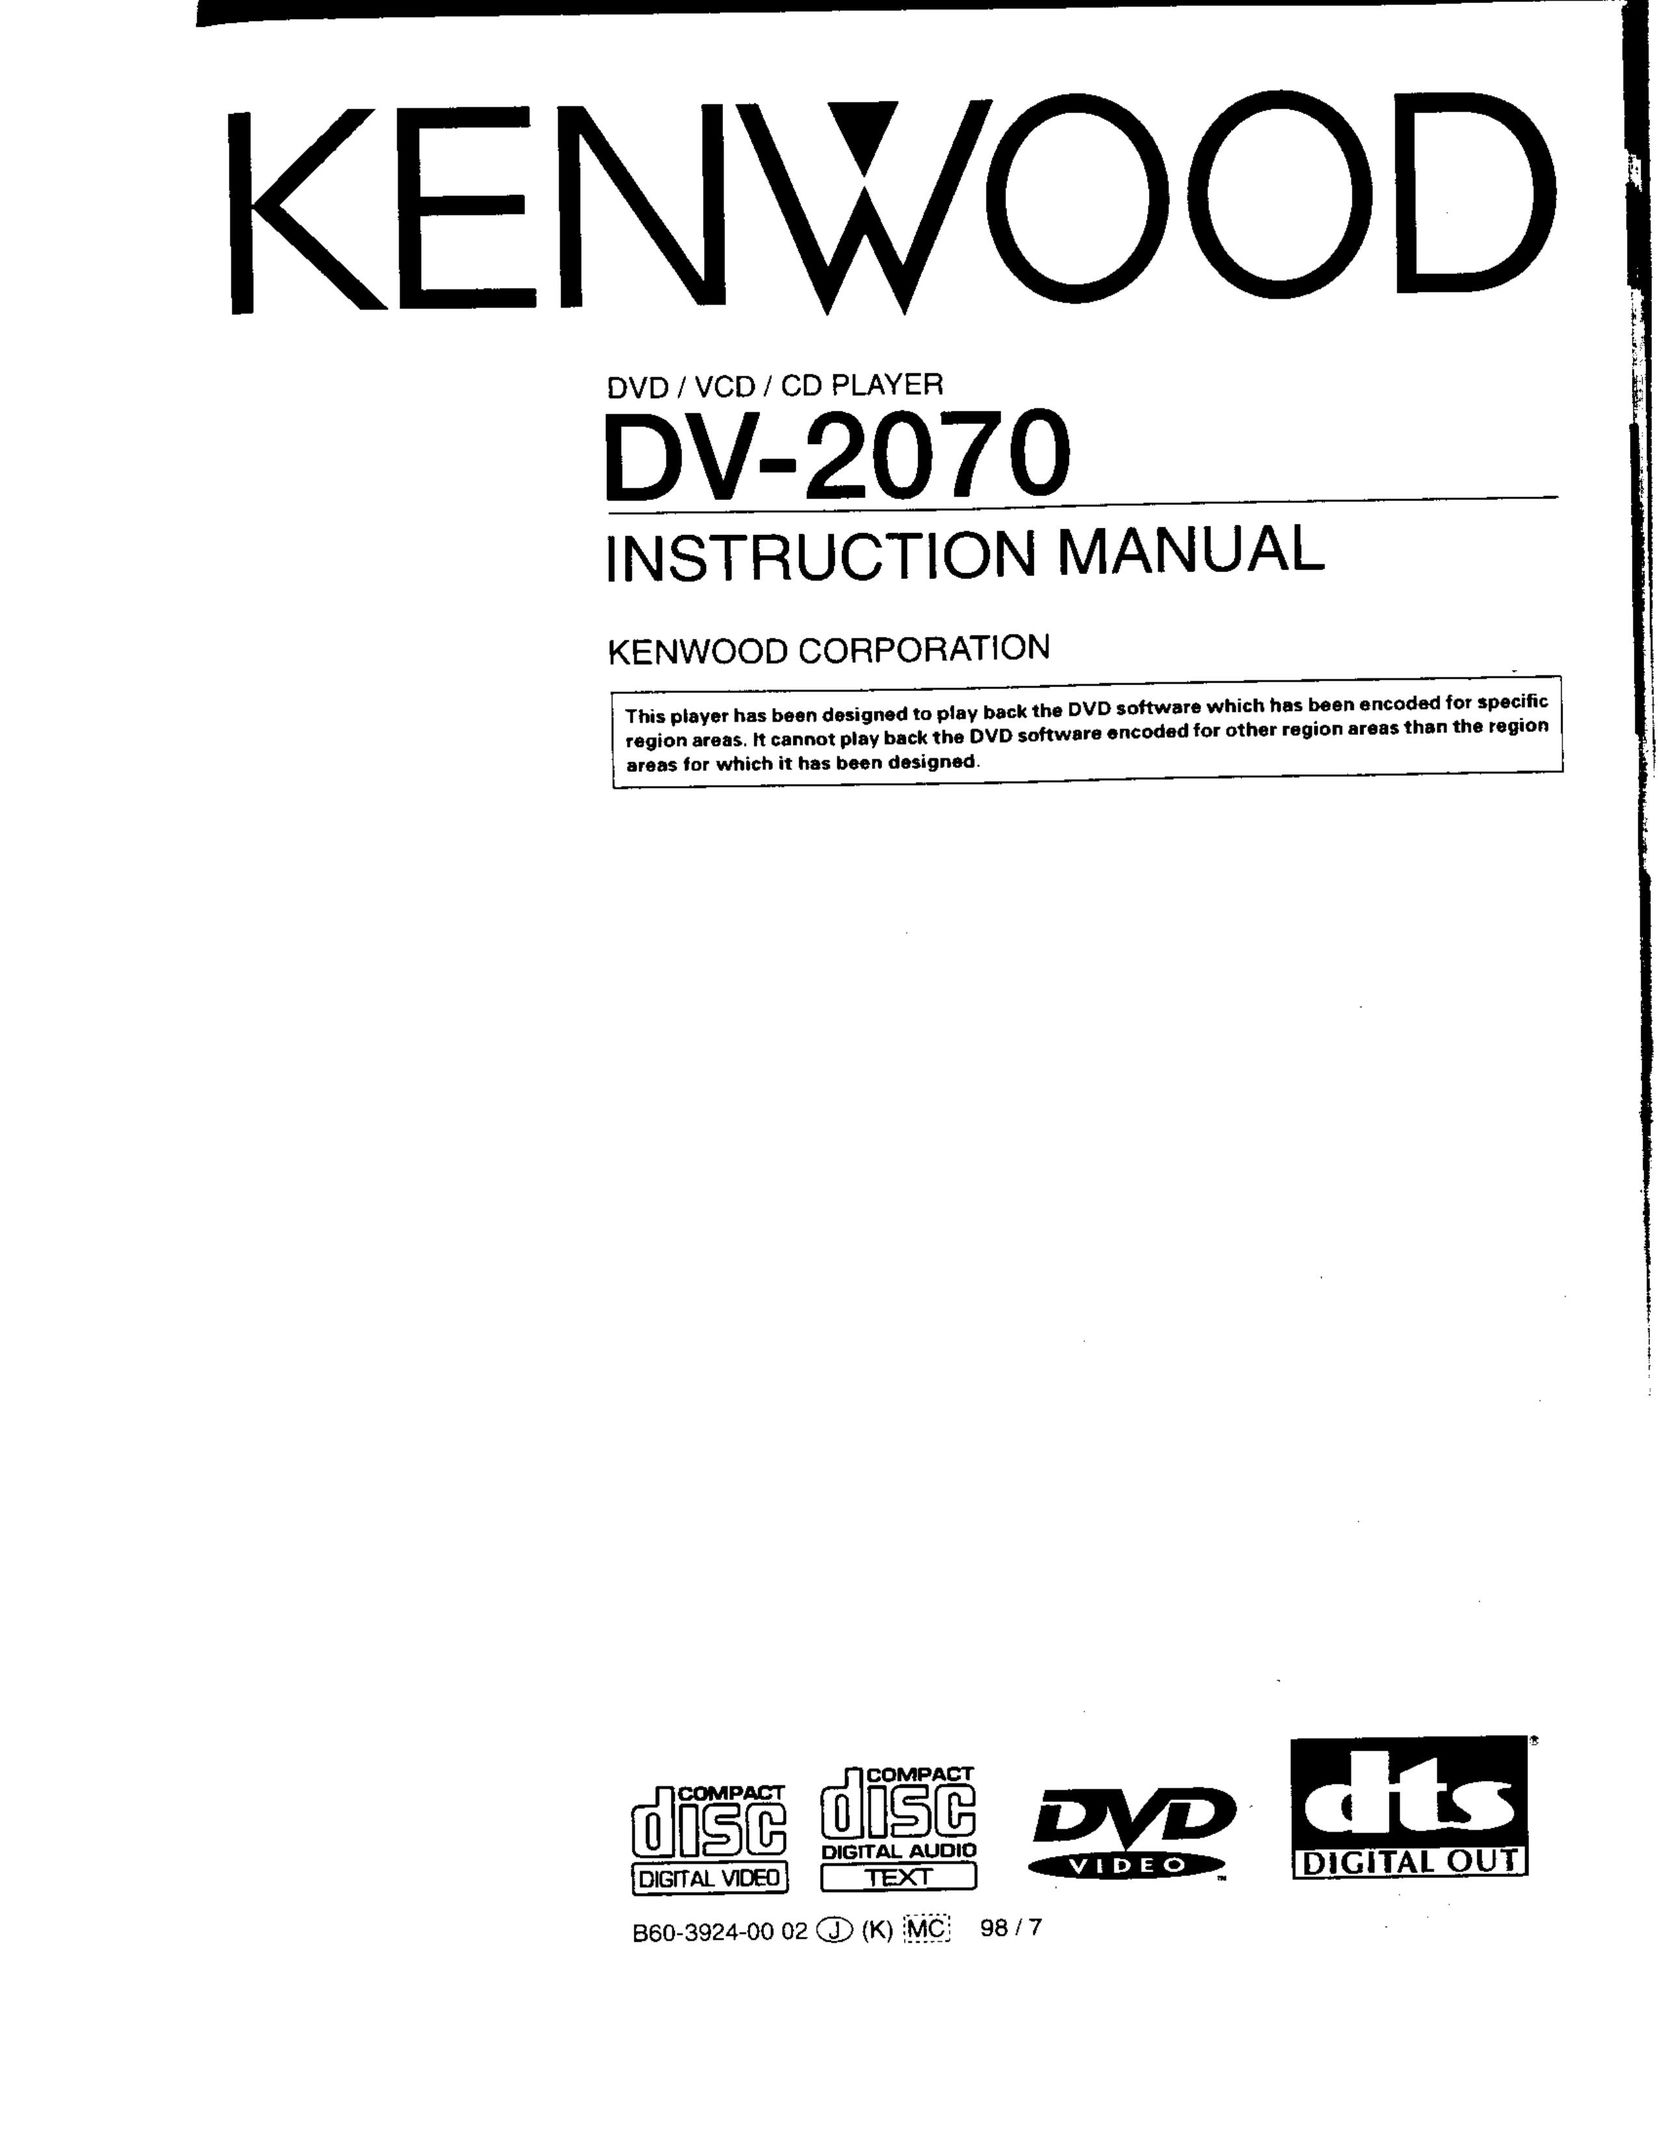 Kenwood DV-2070 DVD VCR Combo User Manual